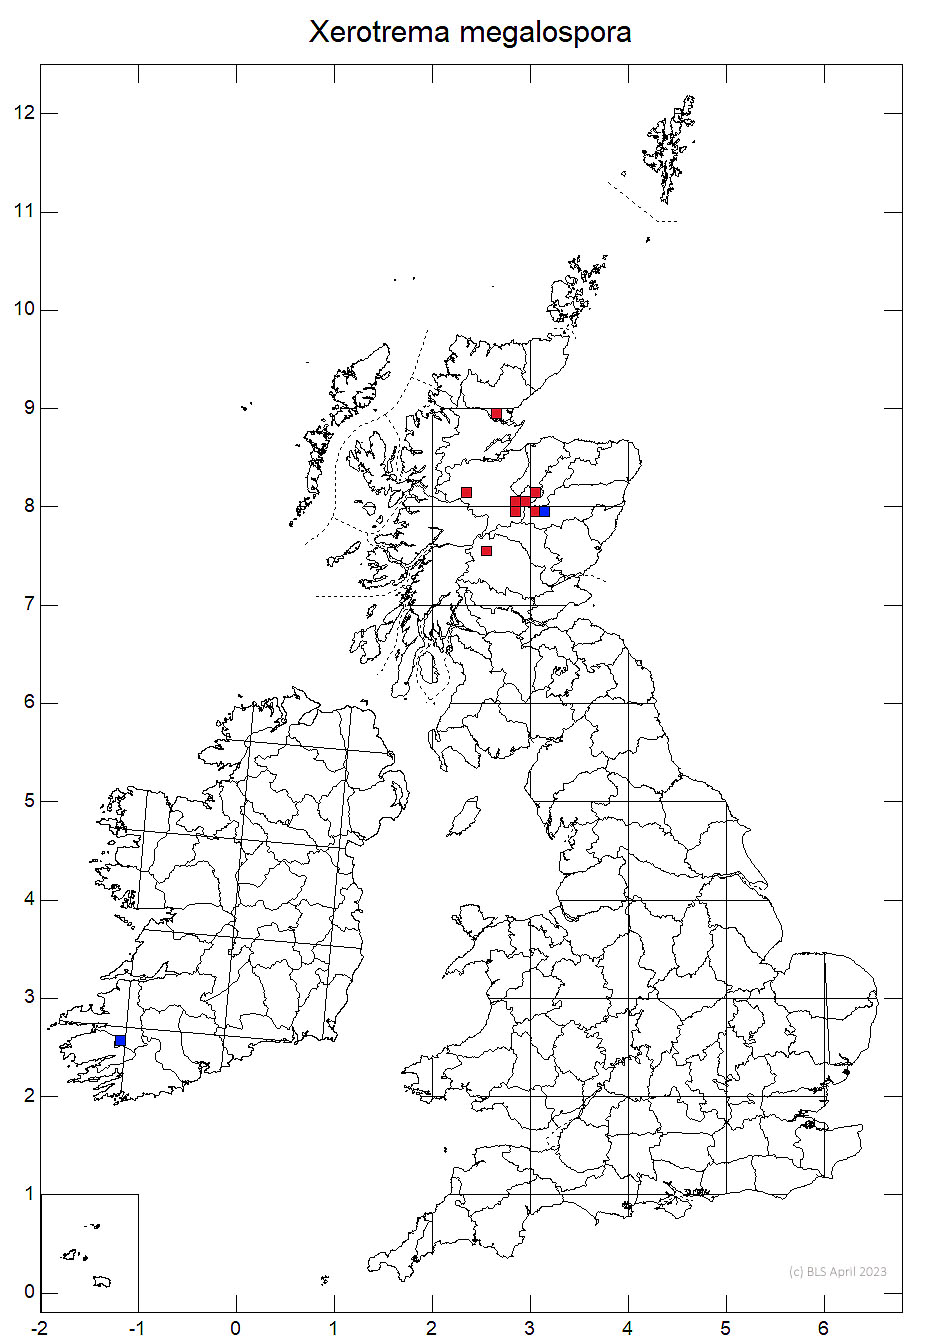 Xerotrema megalospora 10km sq distribution map